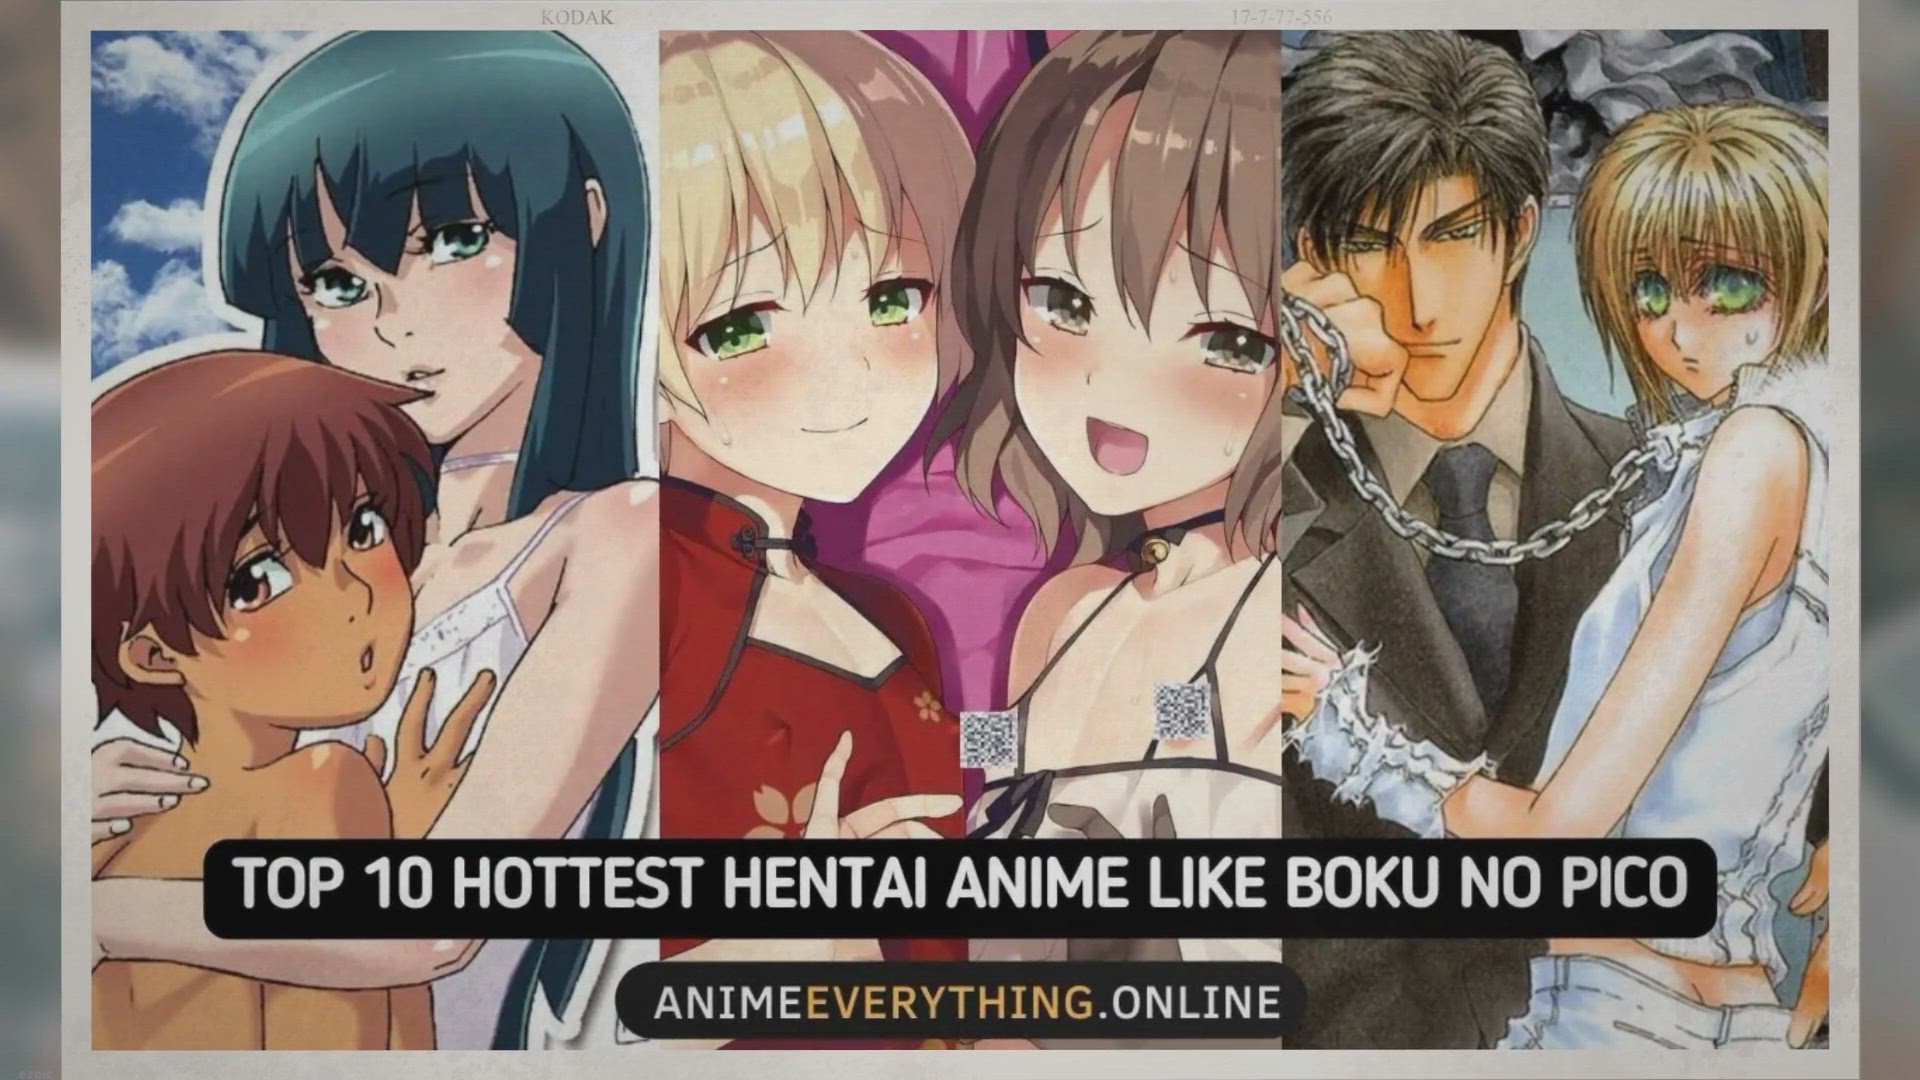 Anime like boku no pico